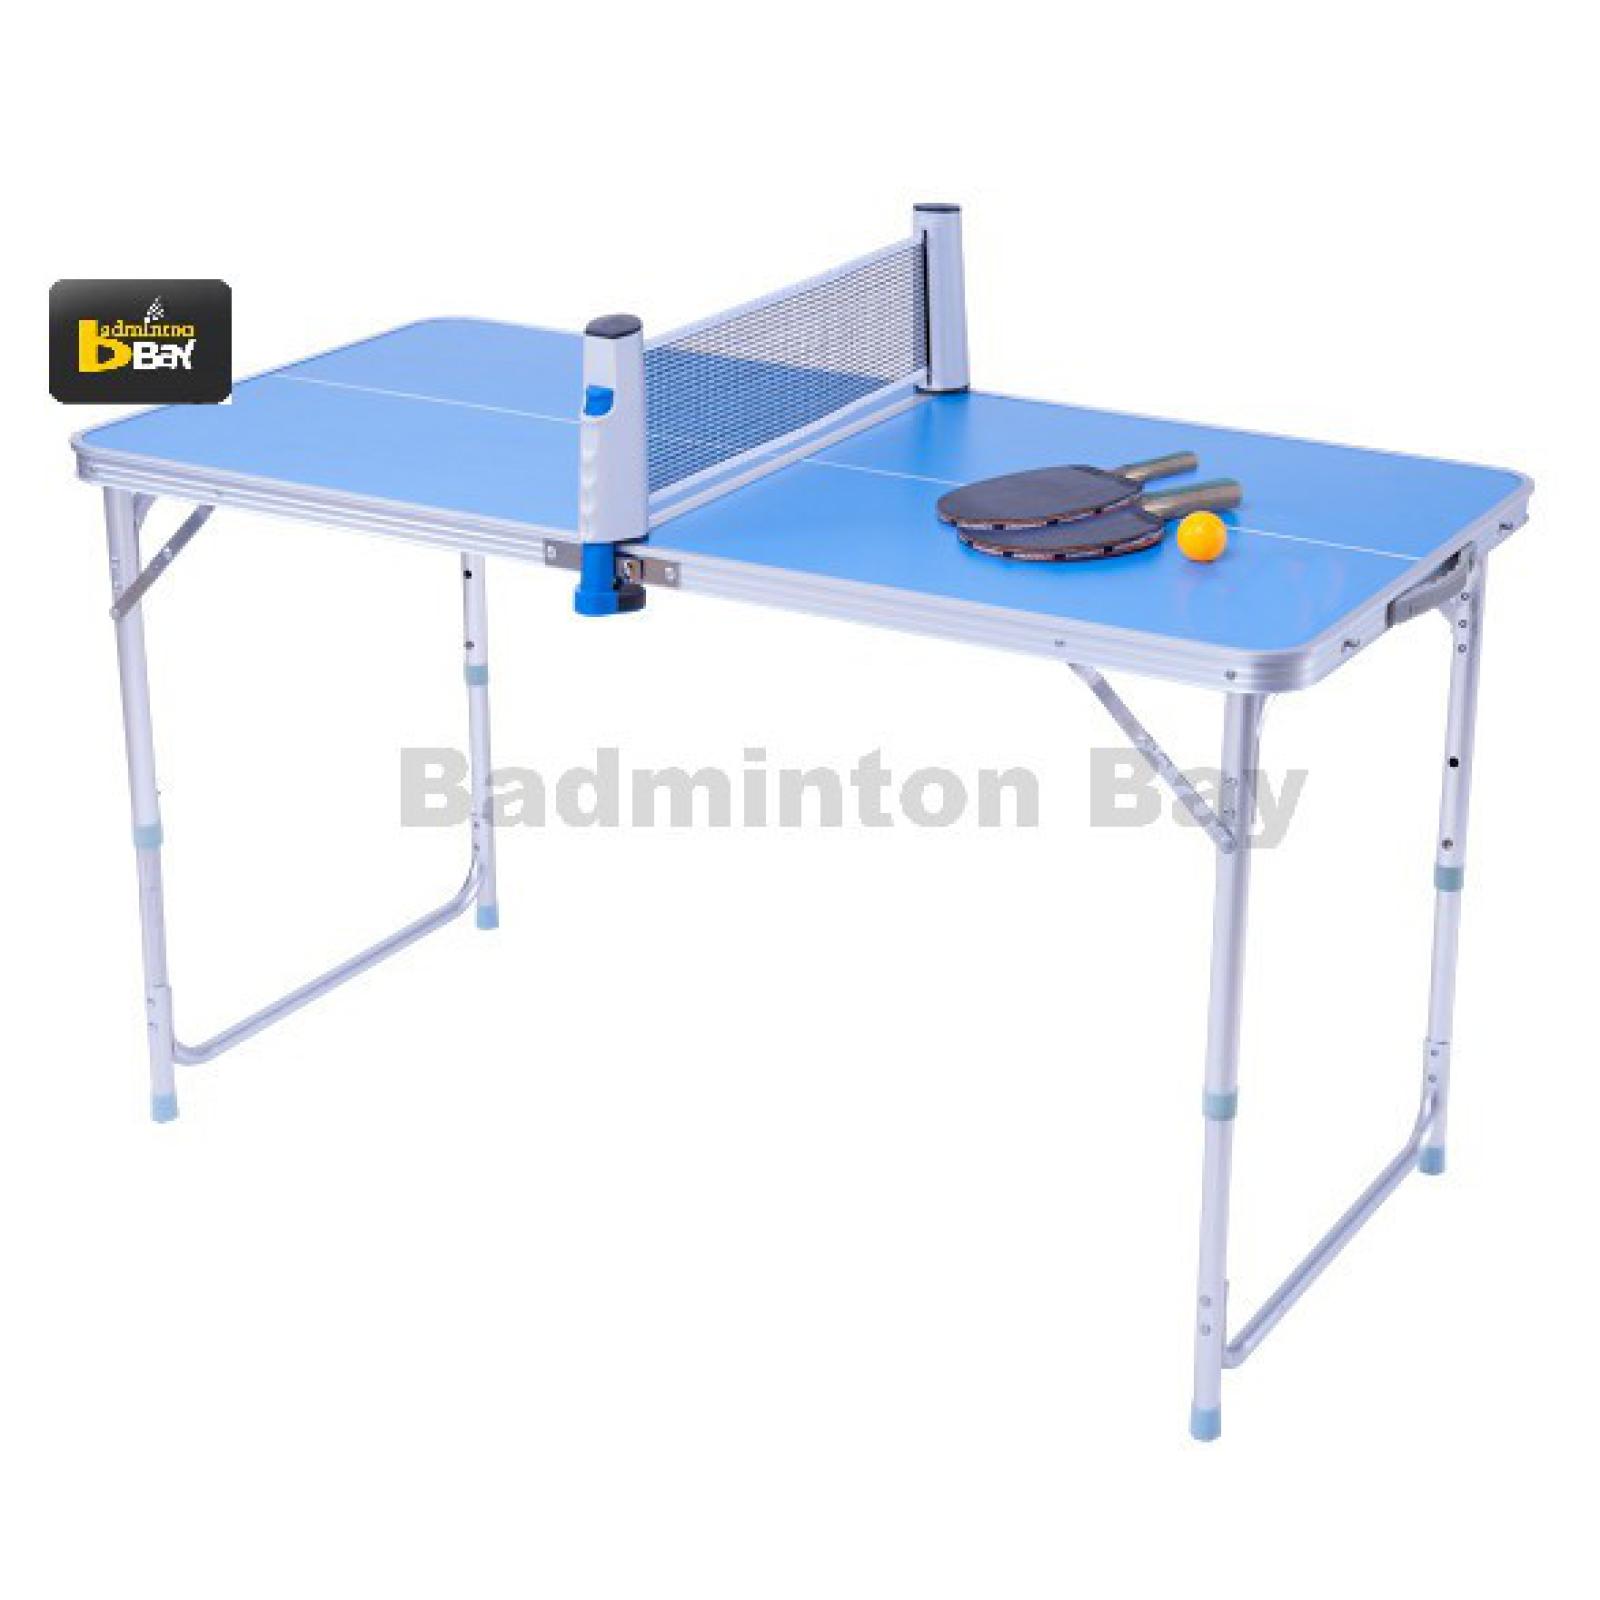 Ping pong or table tennis   prezi